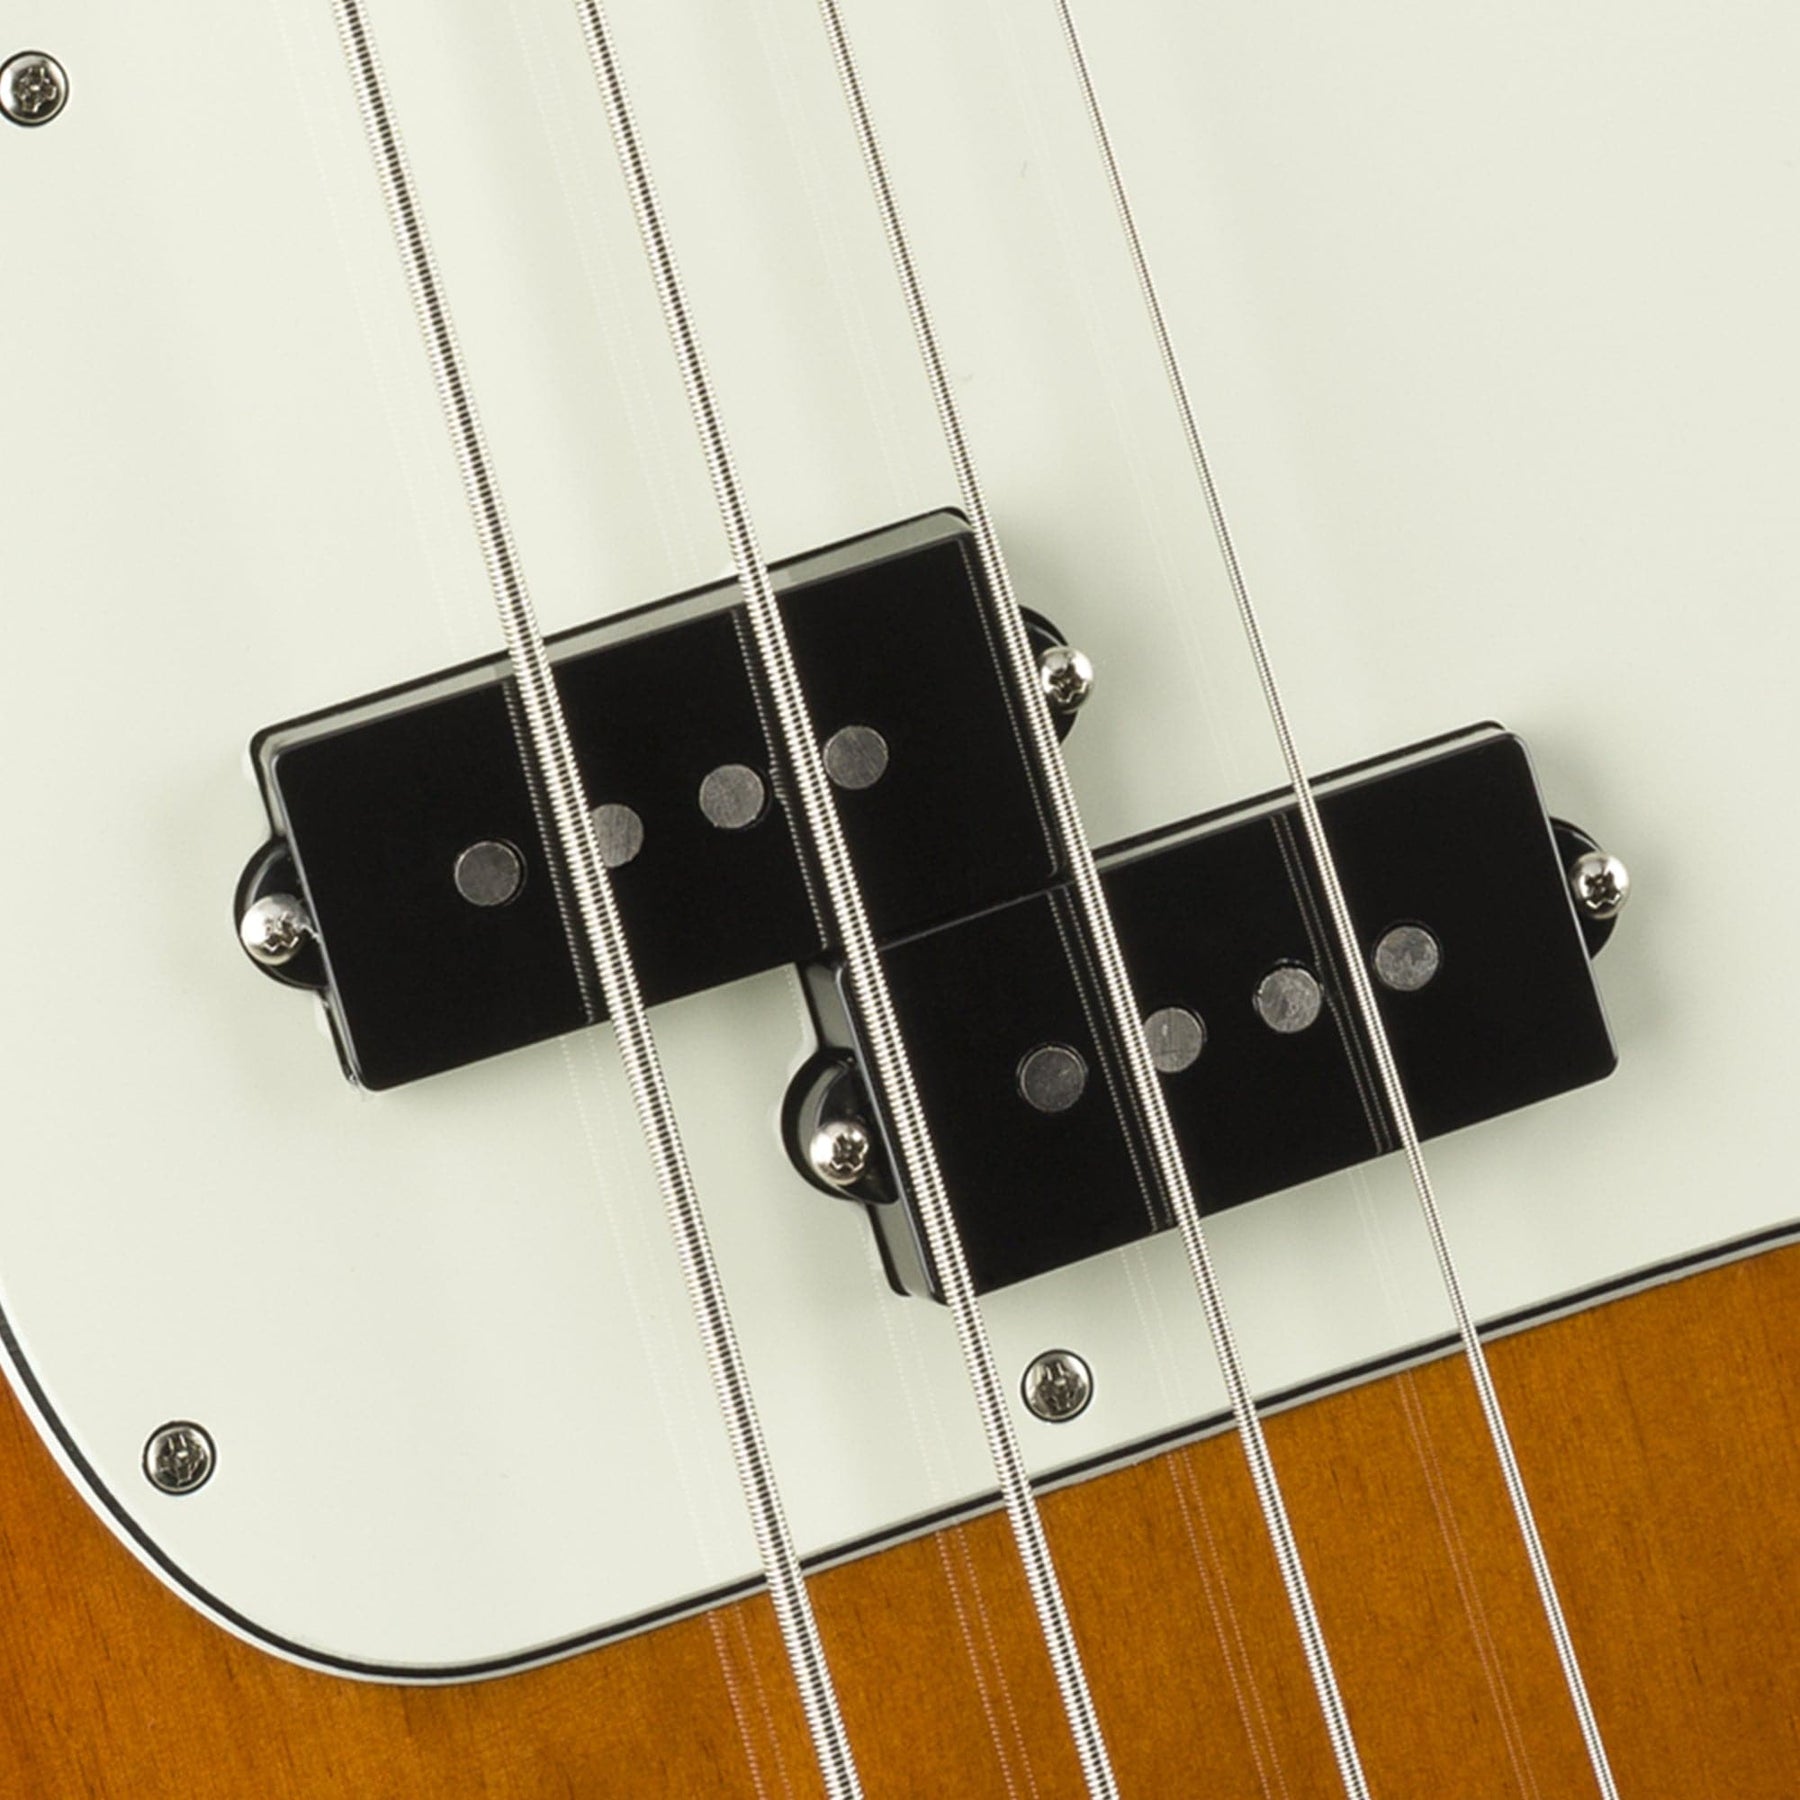 Fender Player Precision Bass - Maple Fingerboard - 3 Colour Sunburst